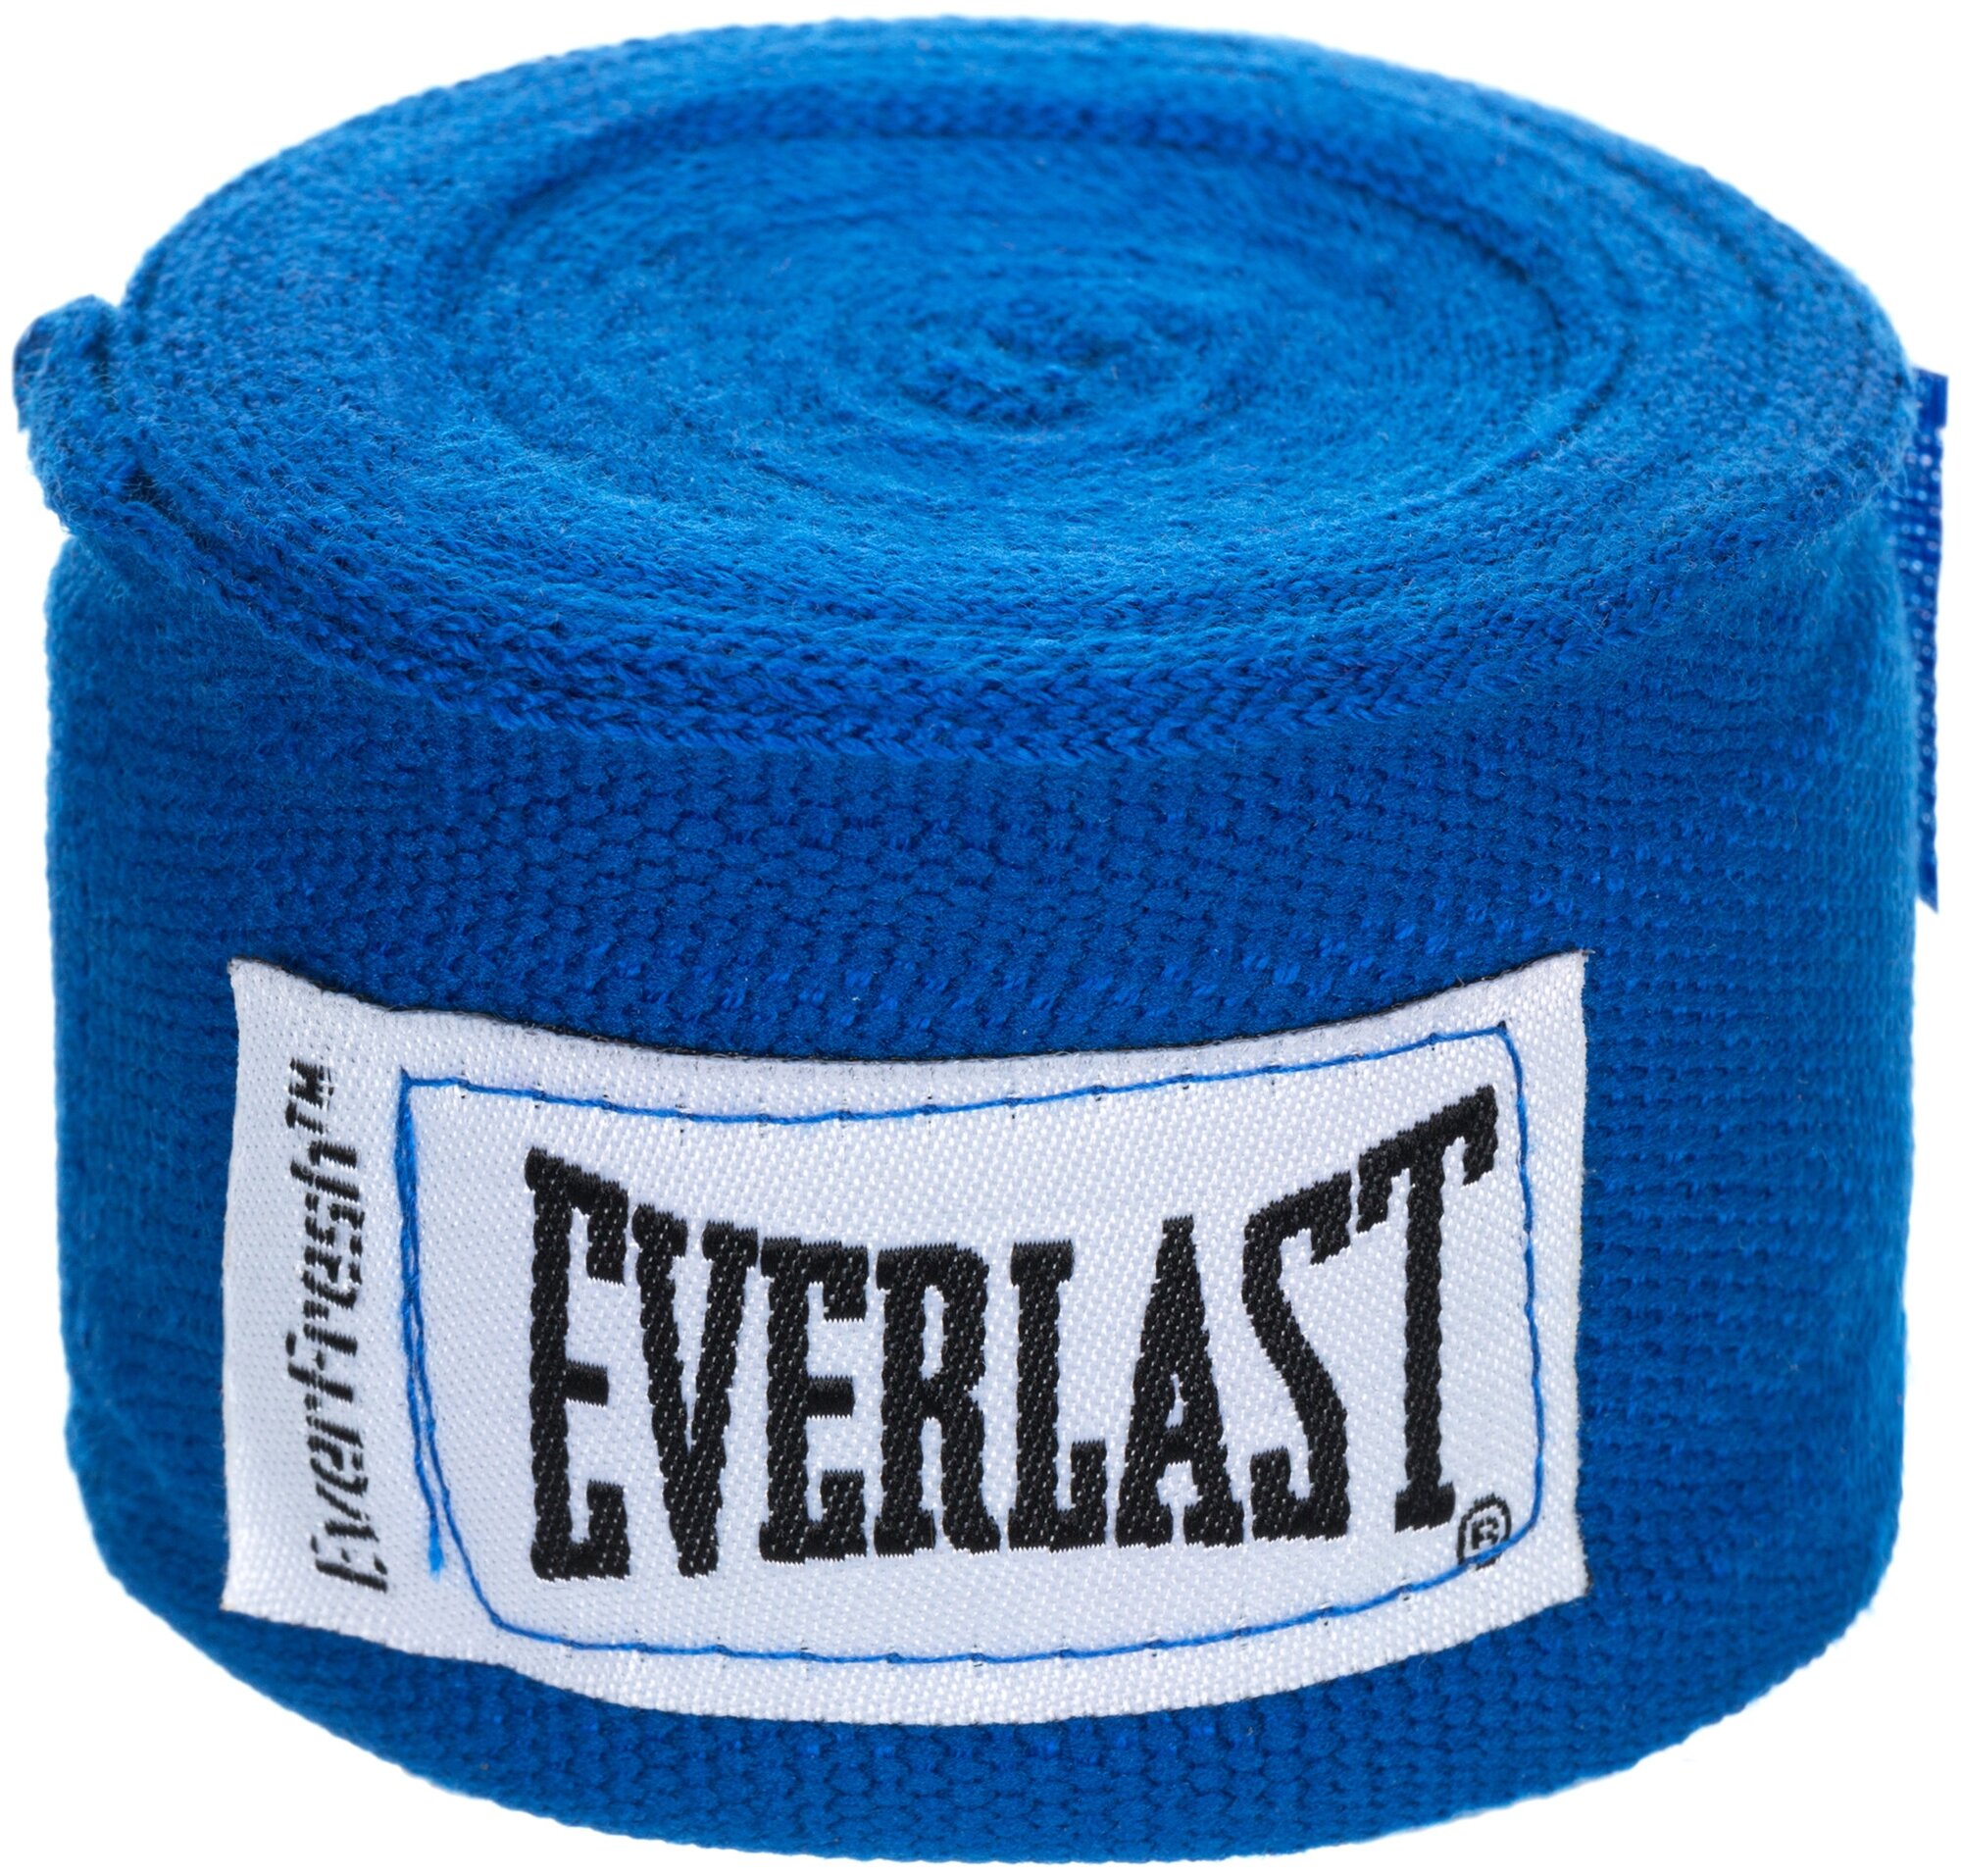  Everlast Elastic 